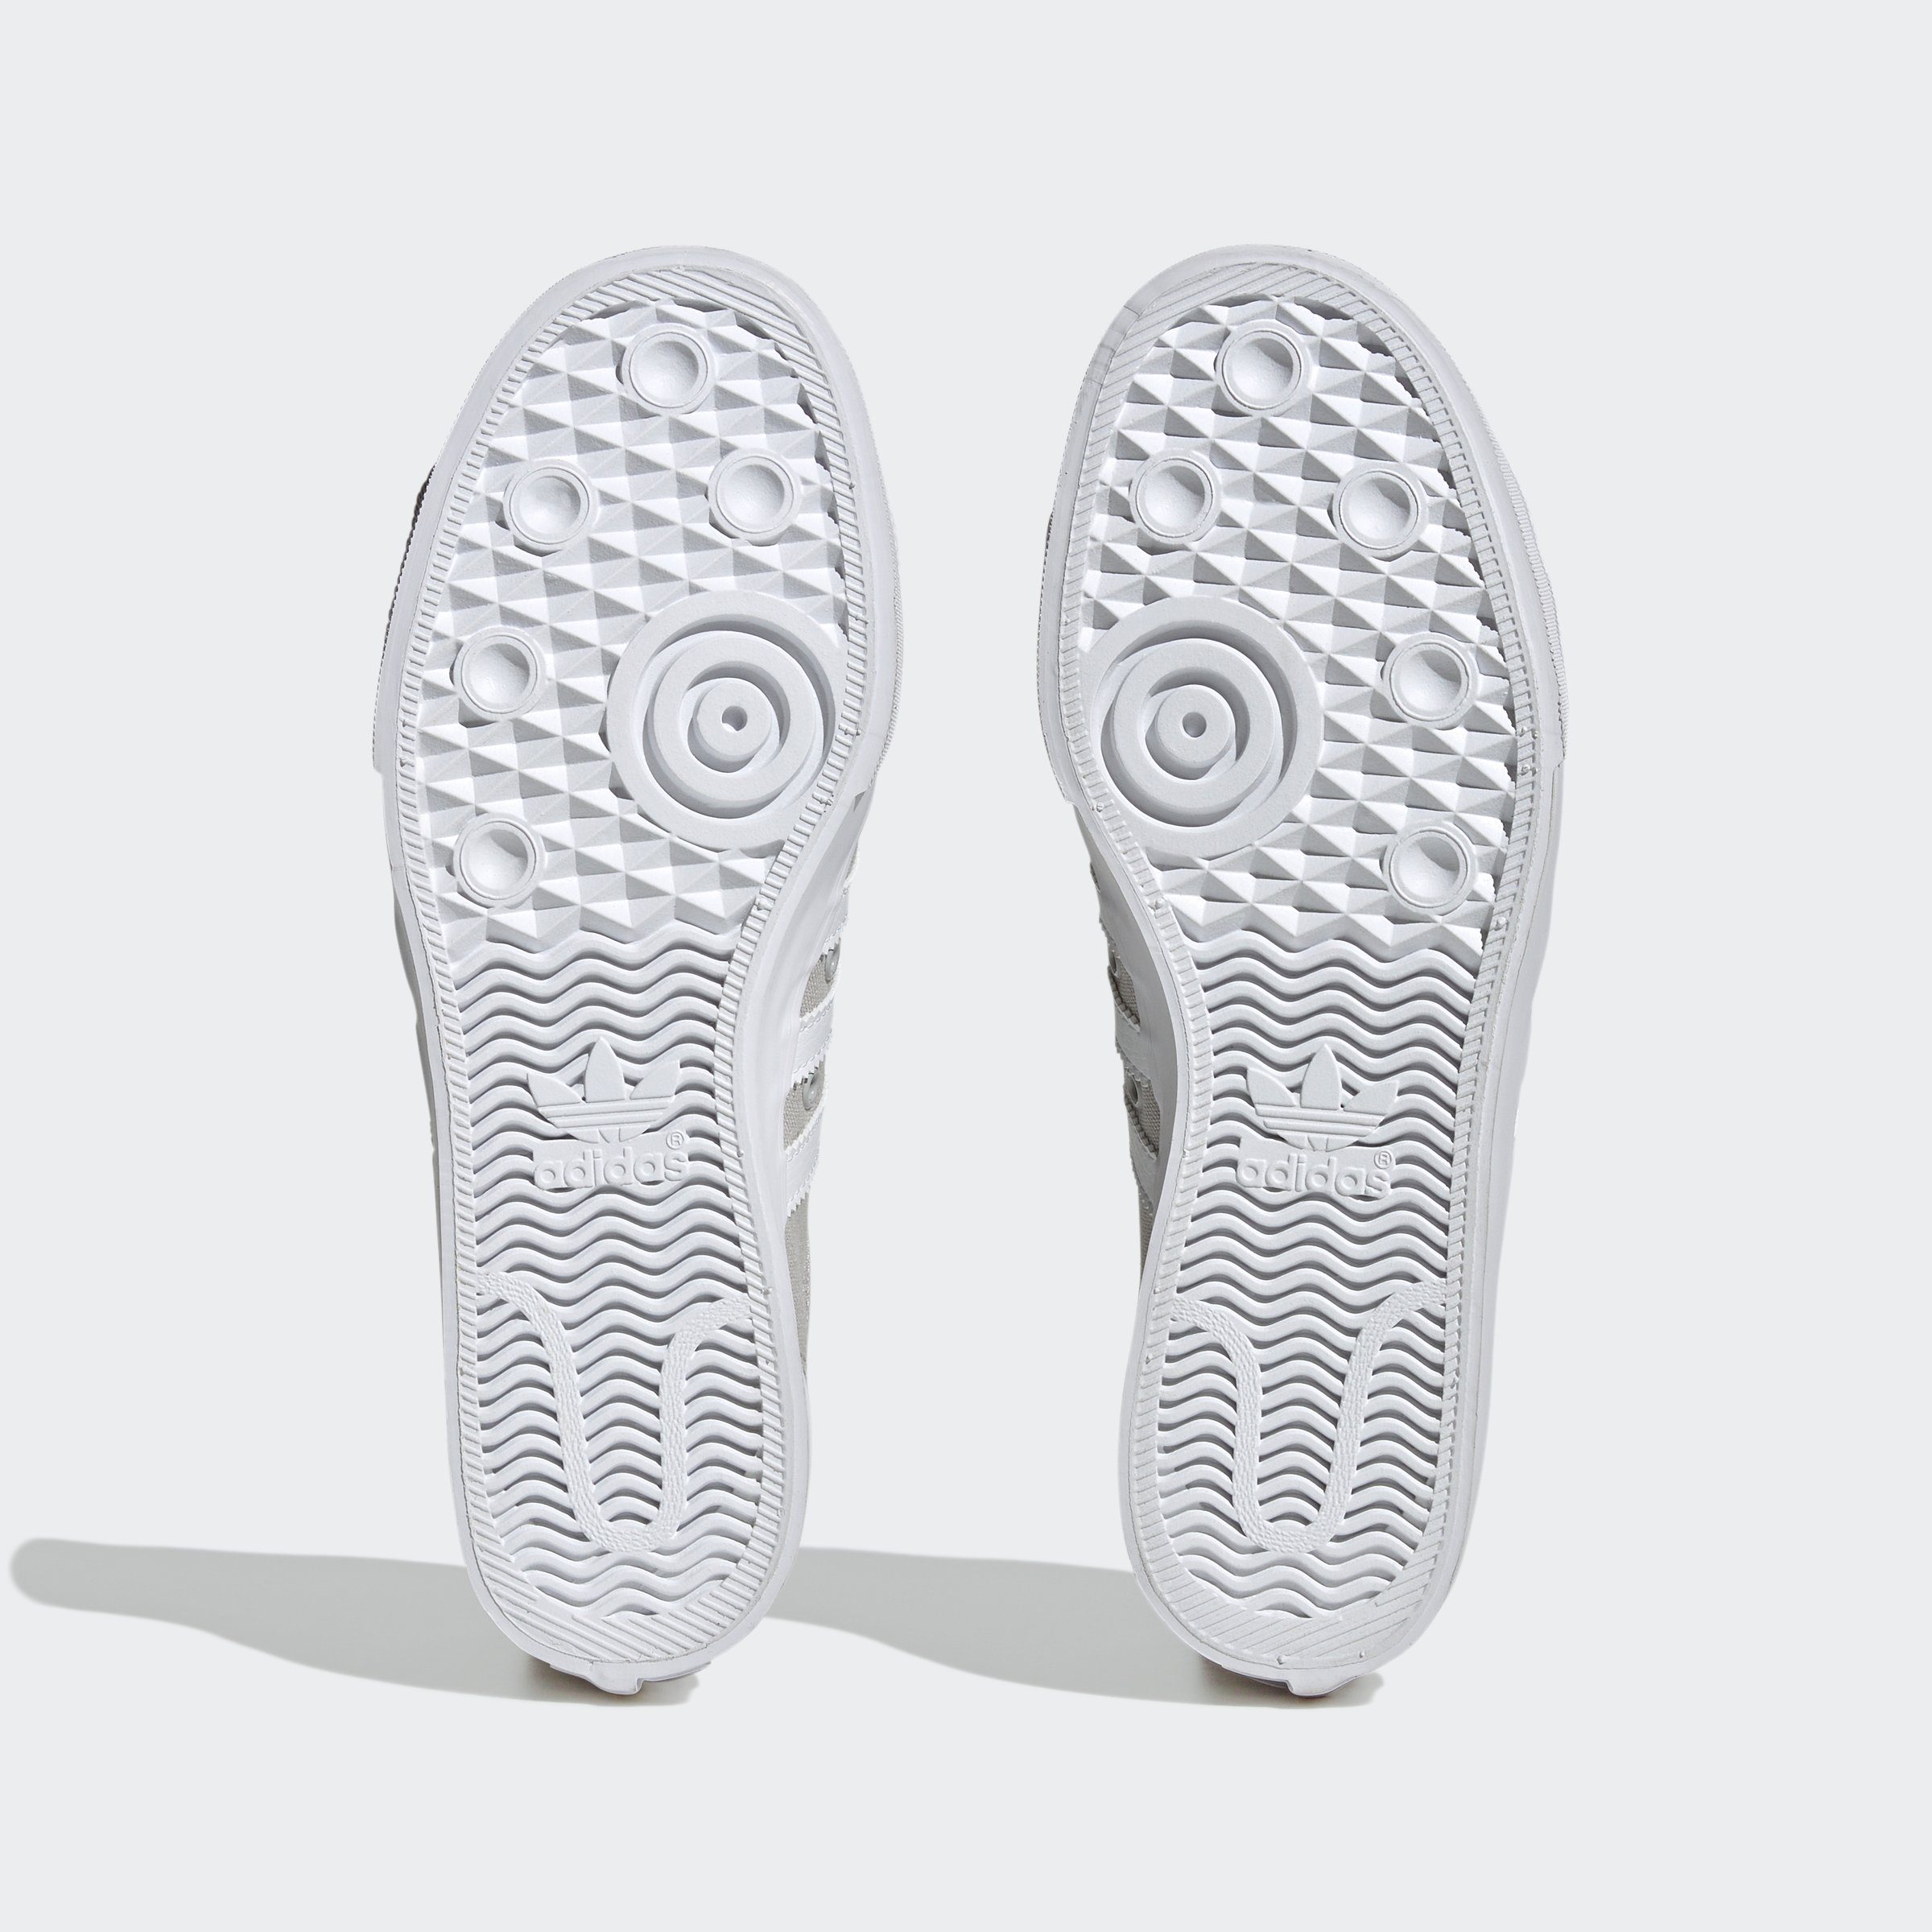 Two NIZZA Grey Originals / Cloud White White Cloud adidas / Sneaker